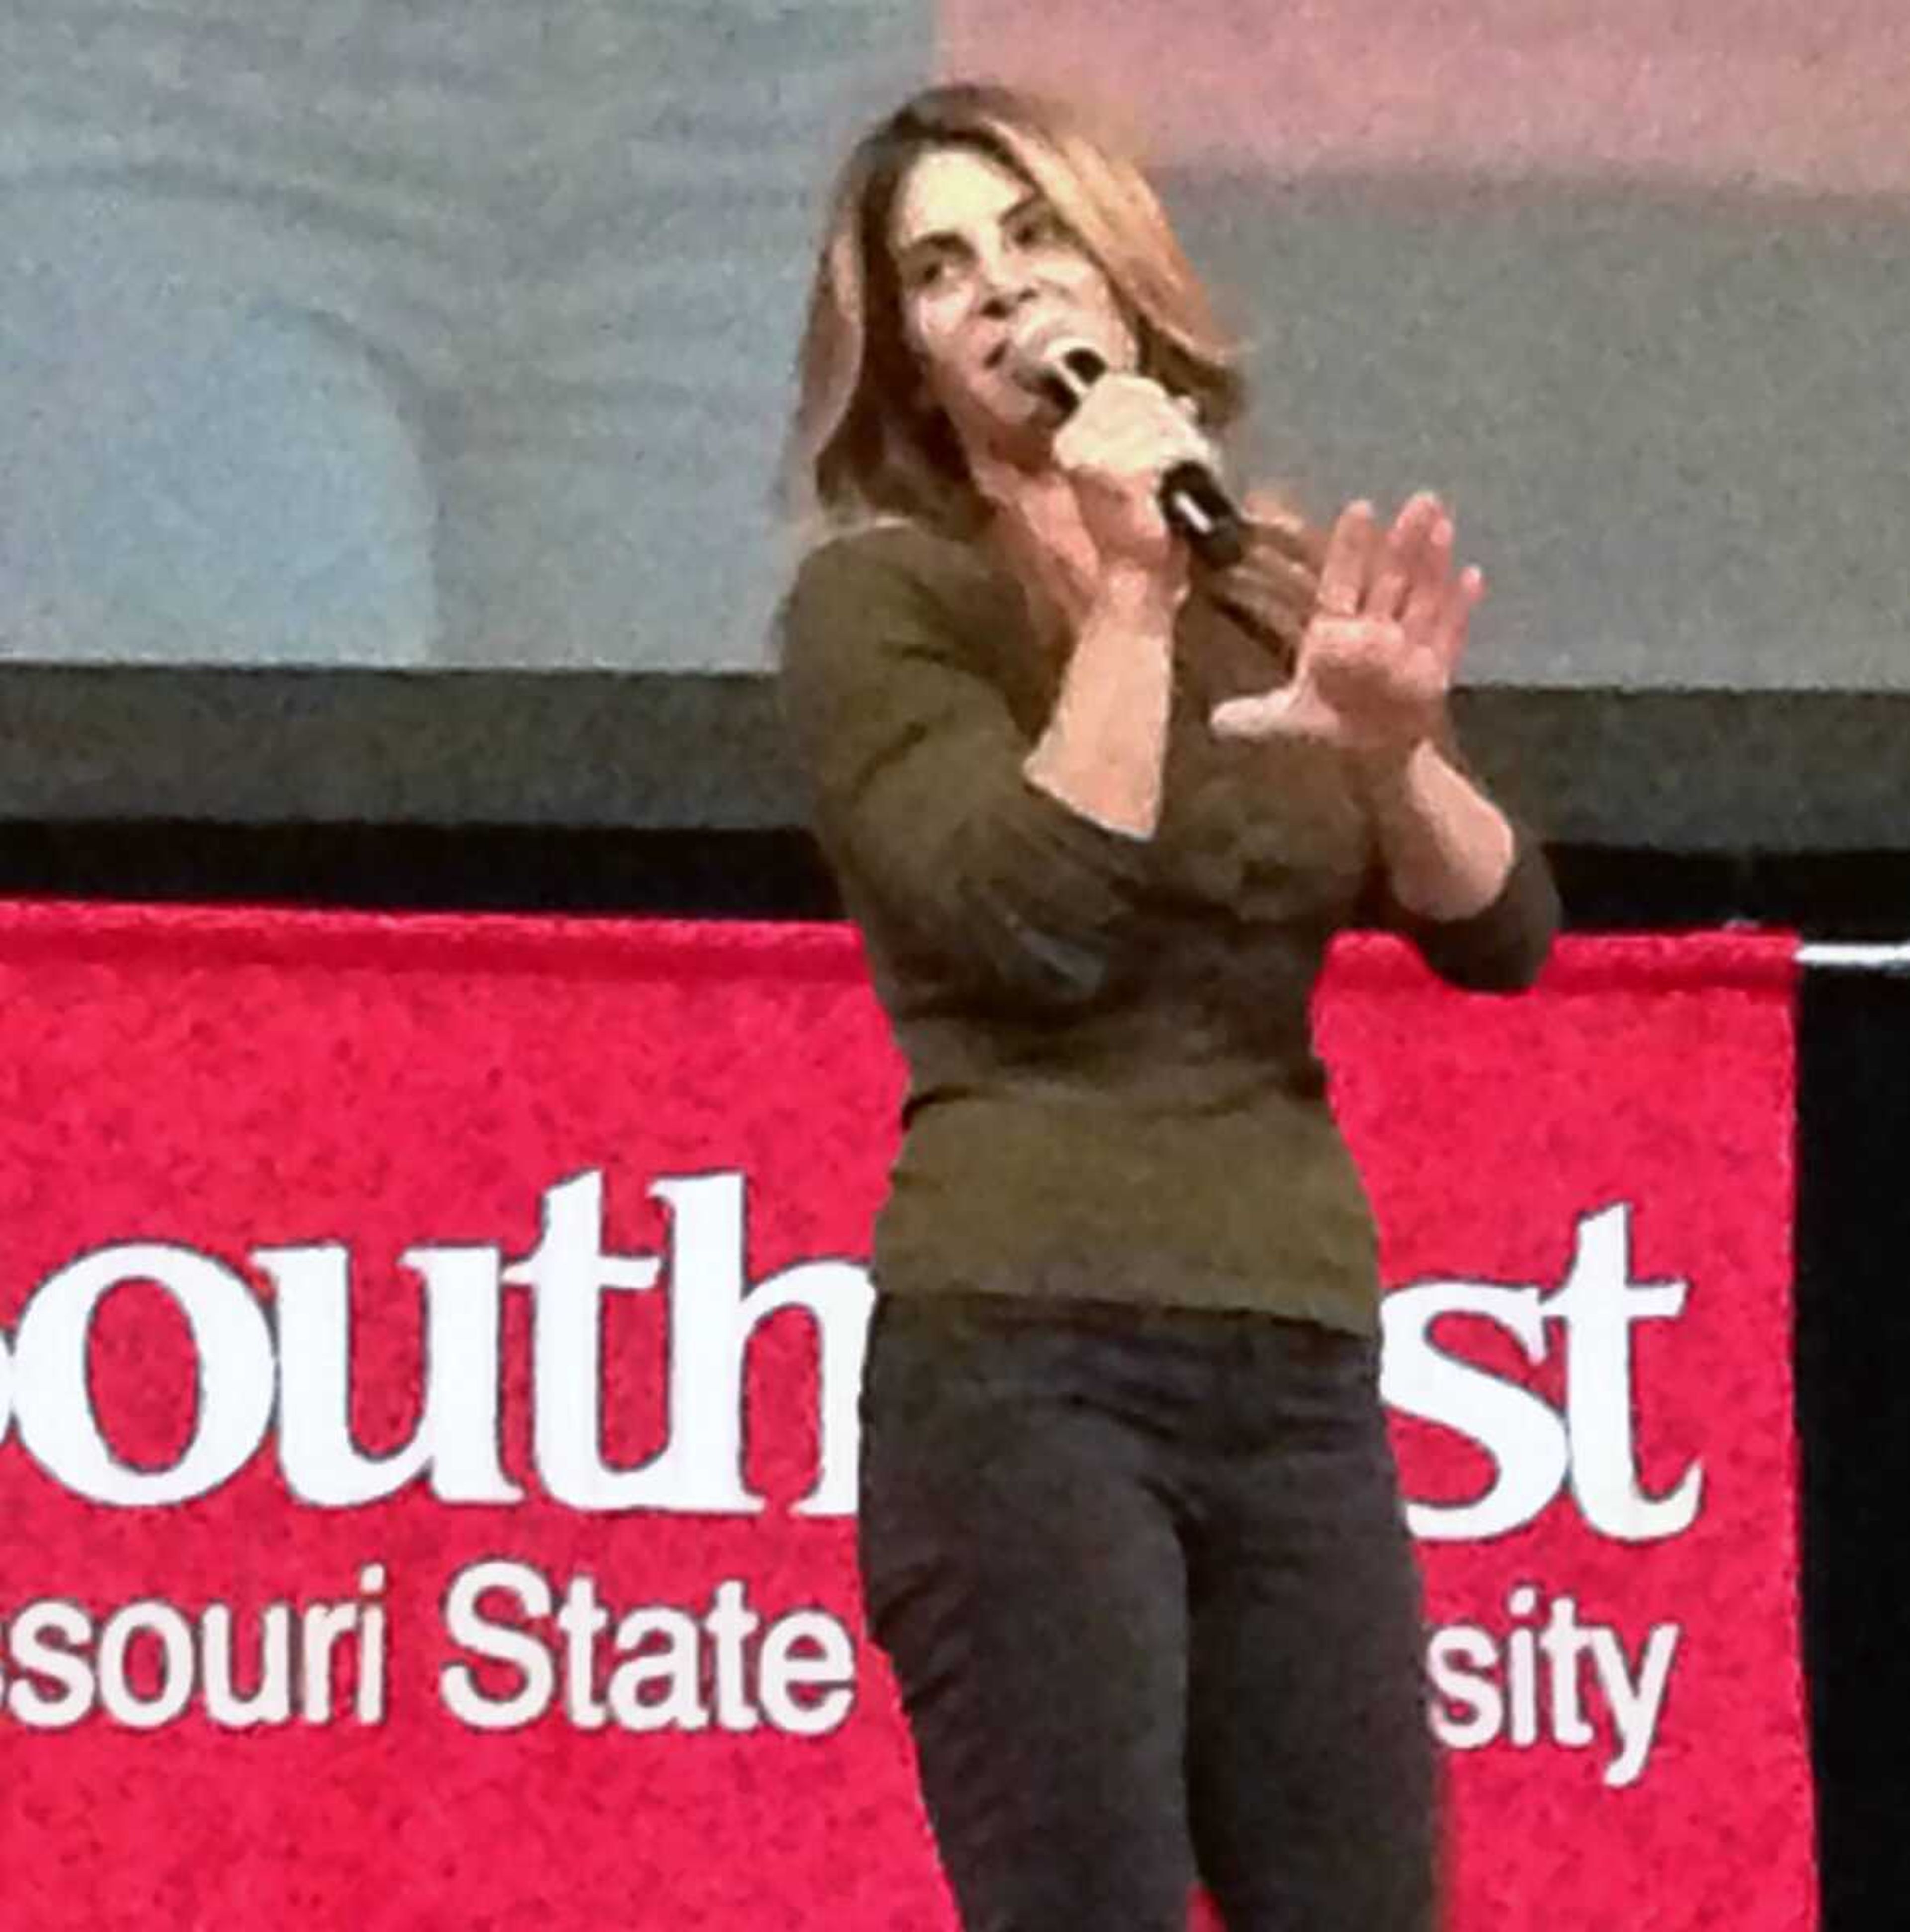 Jillian Michaels speaking at the Show Me Center.